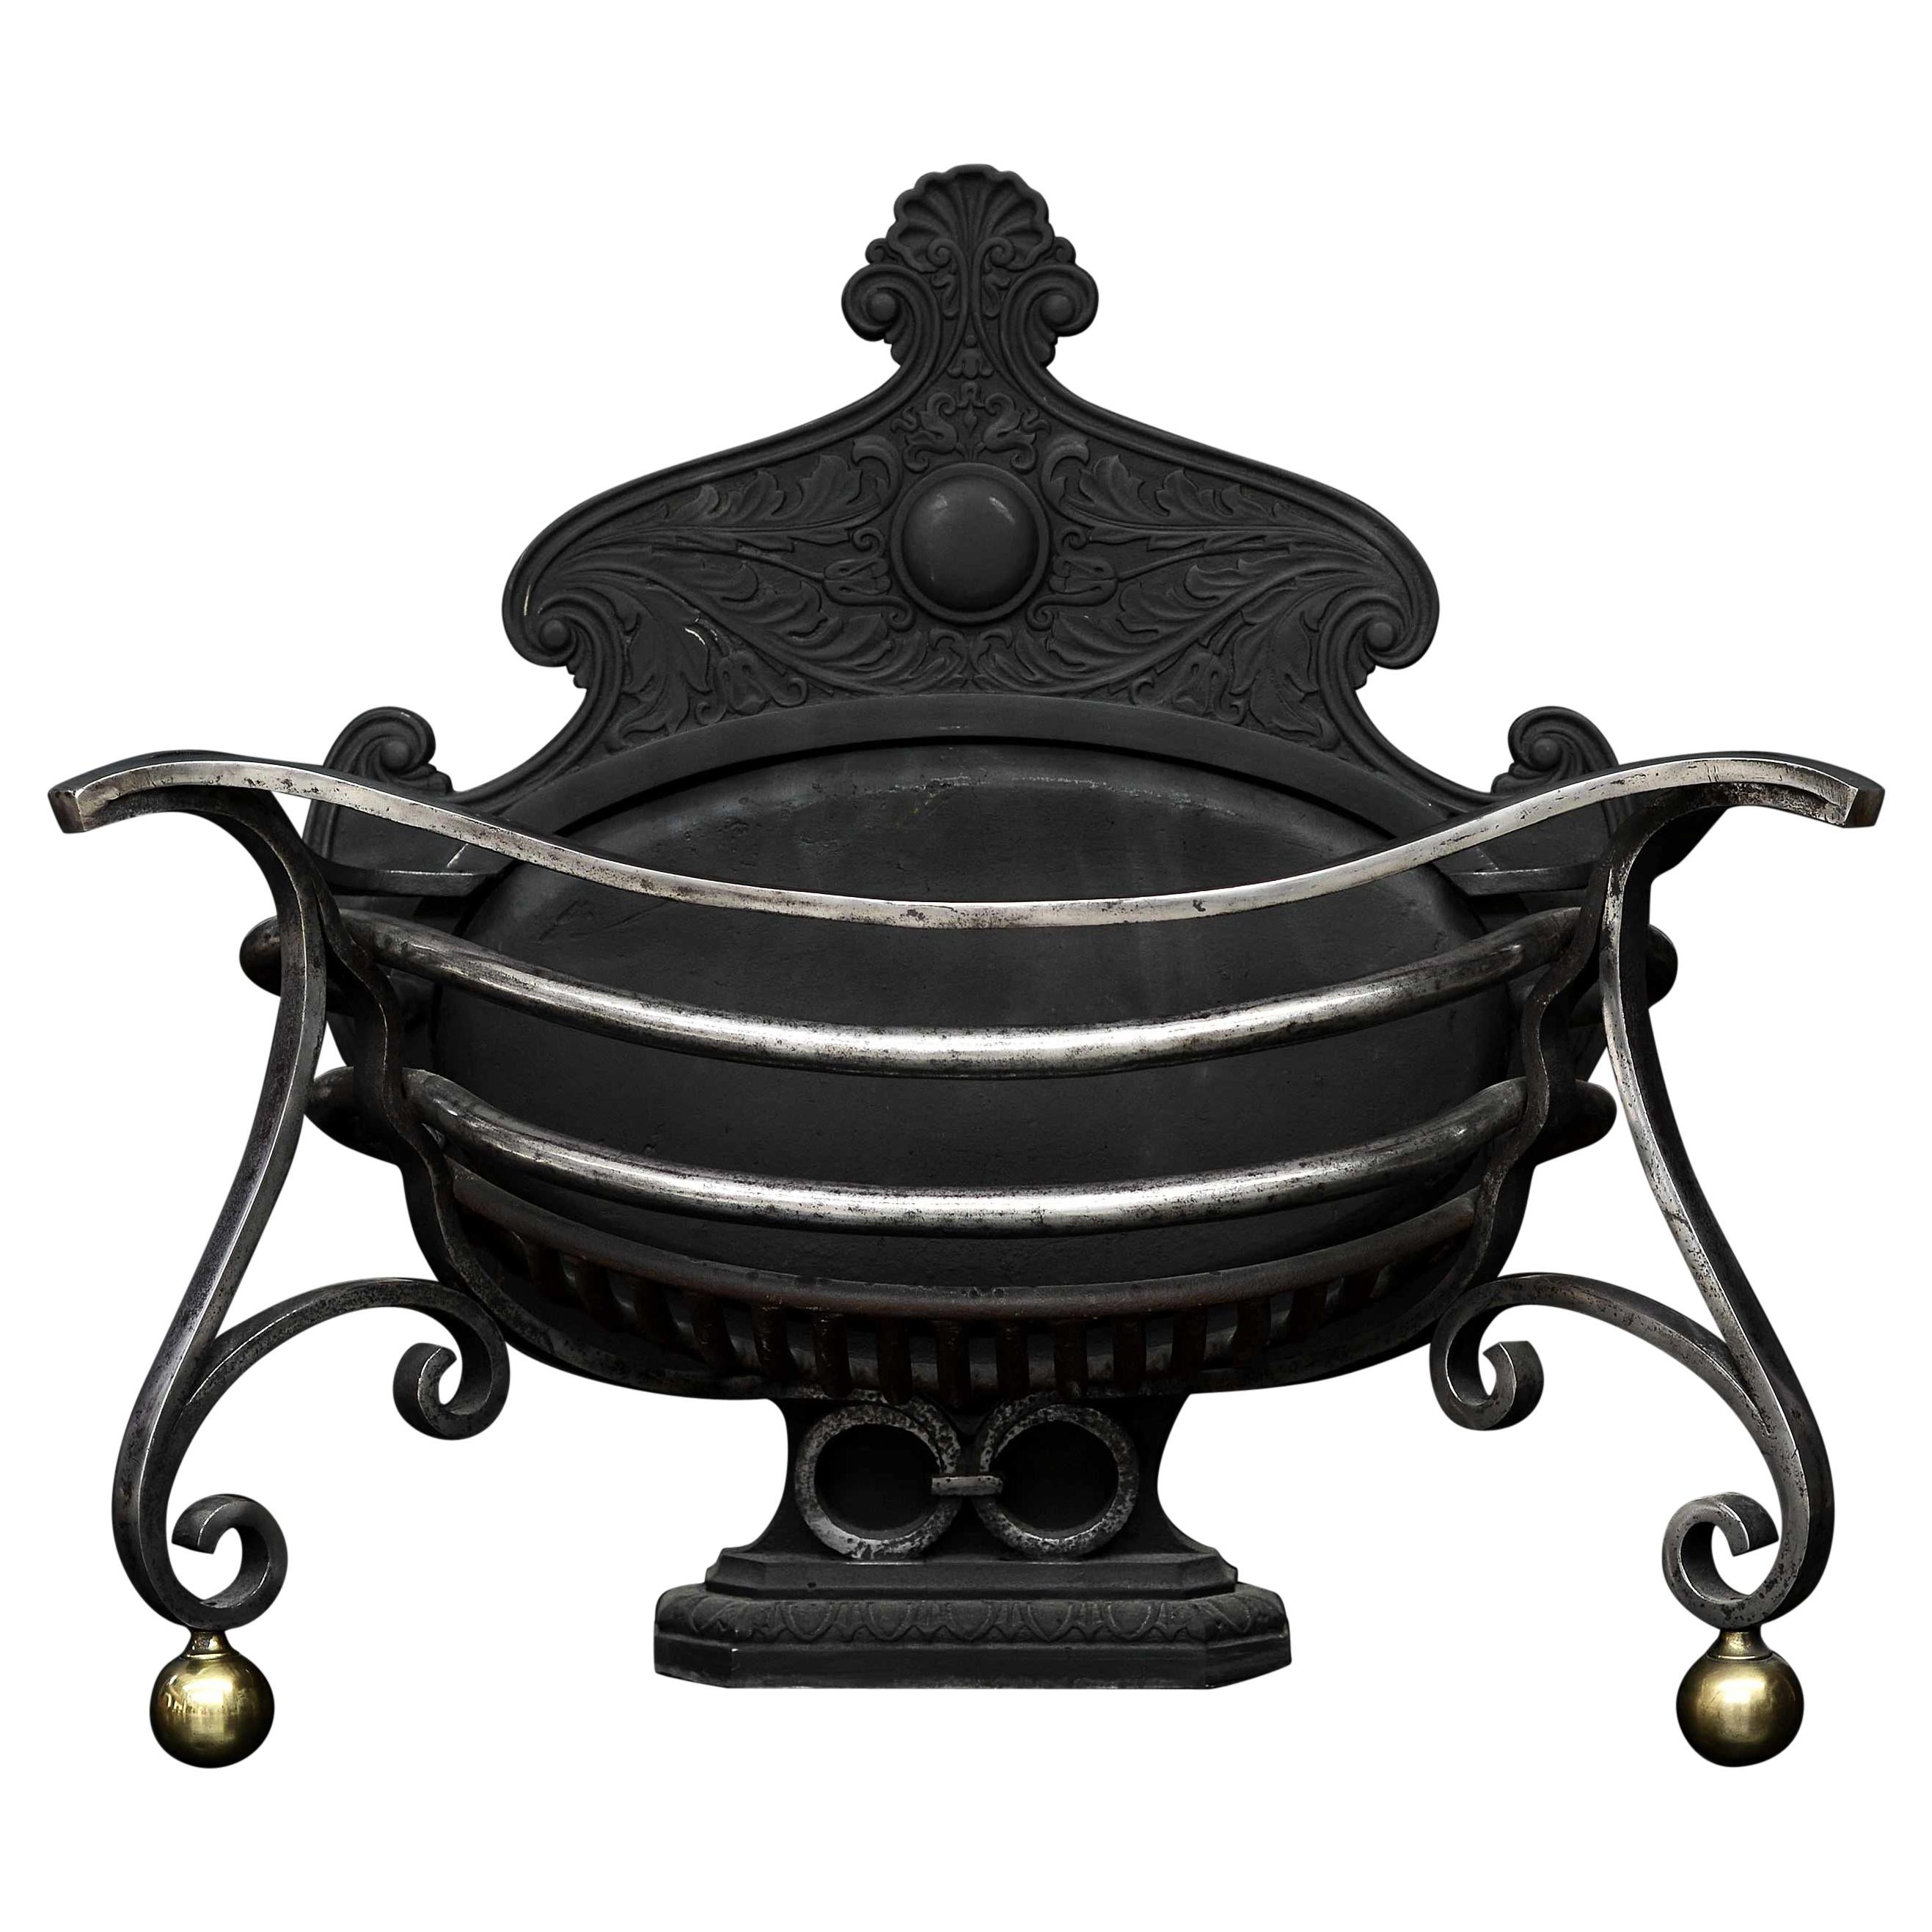 Unusual Shaped Art Nouveau Wrought Iron Firebasket